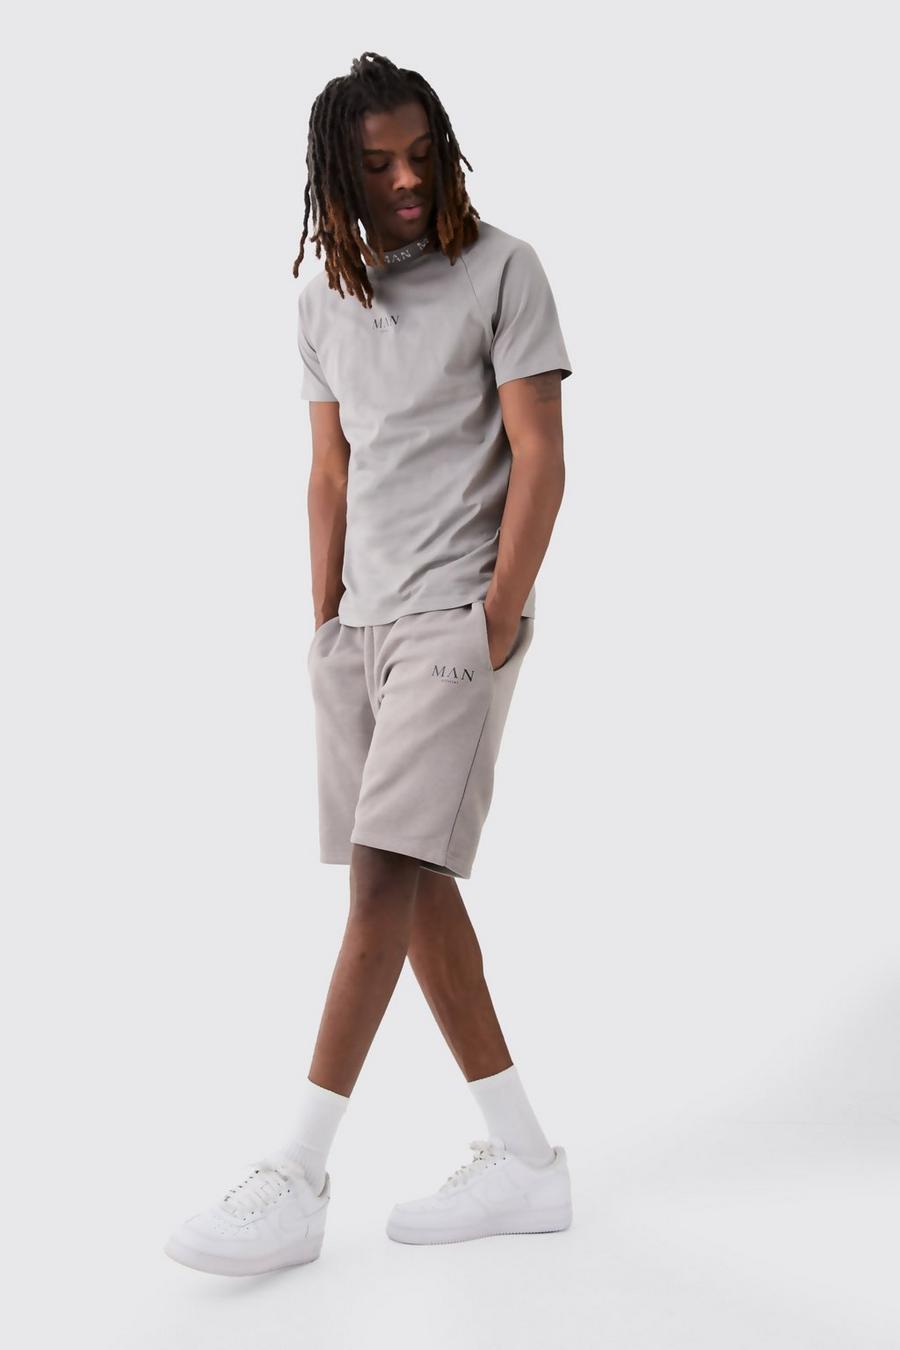 Geripptes Man Slim T-Shirt und Shorts, Charcoal